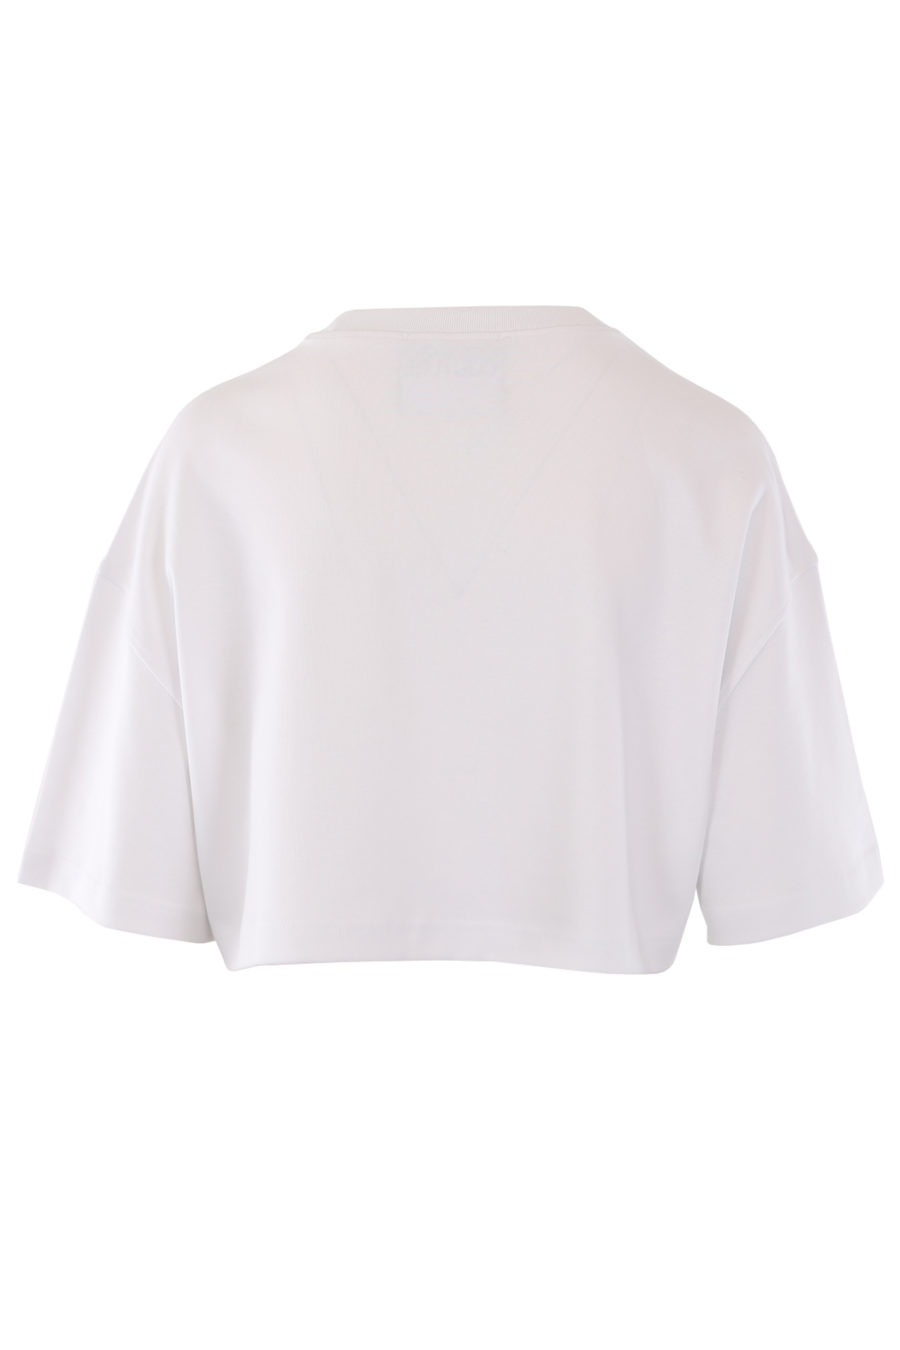 Camiseta corta blanca con logo flores - IMG 0808